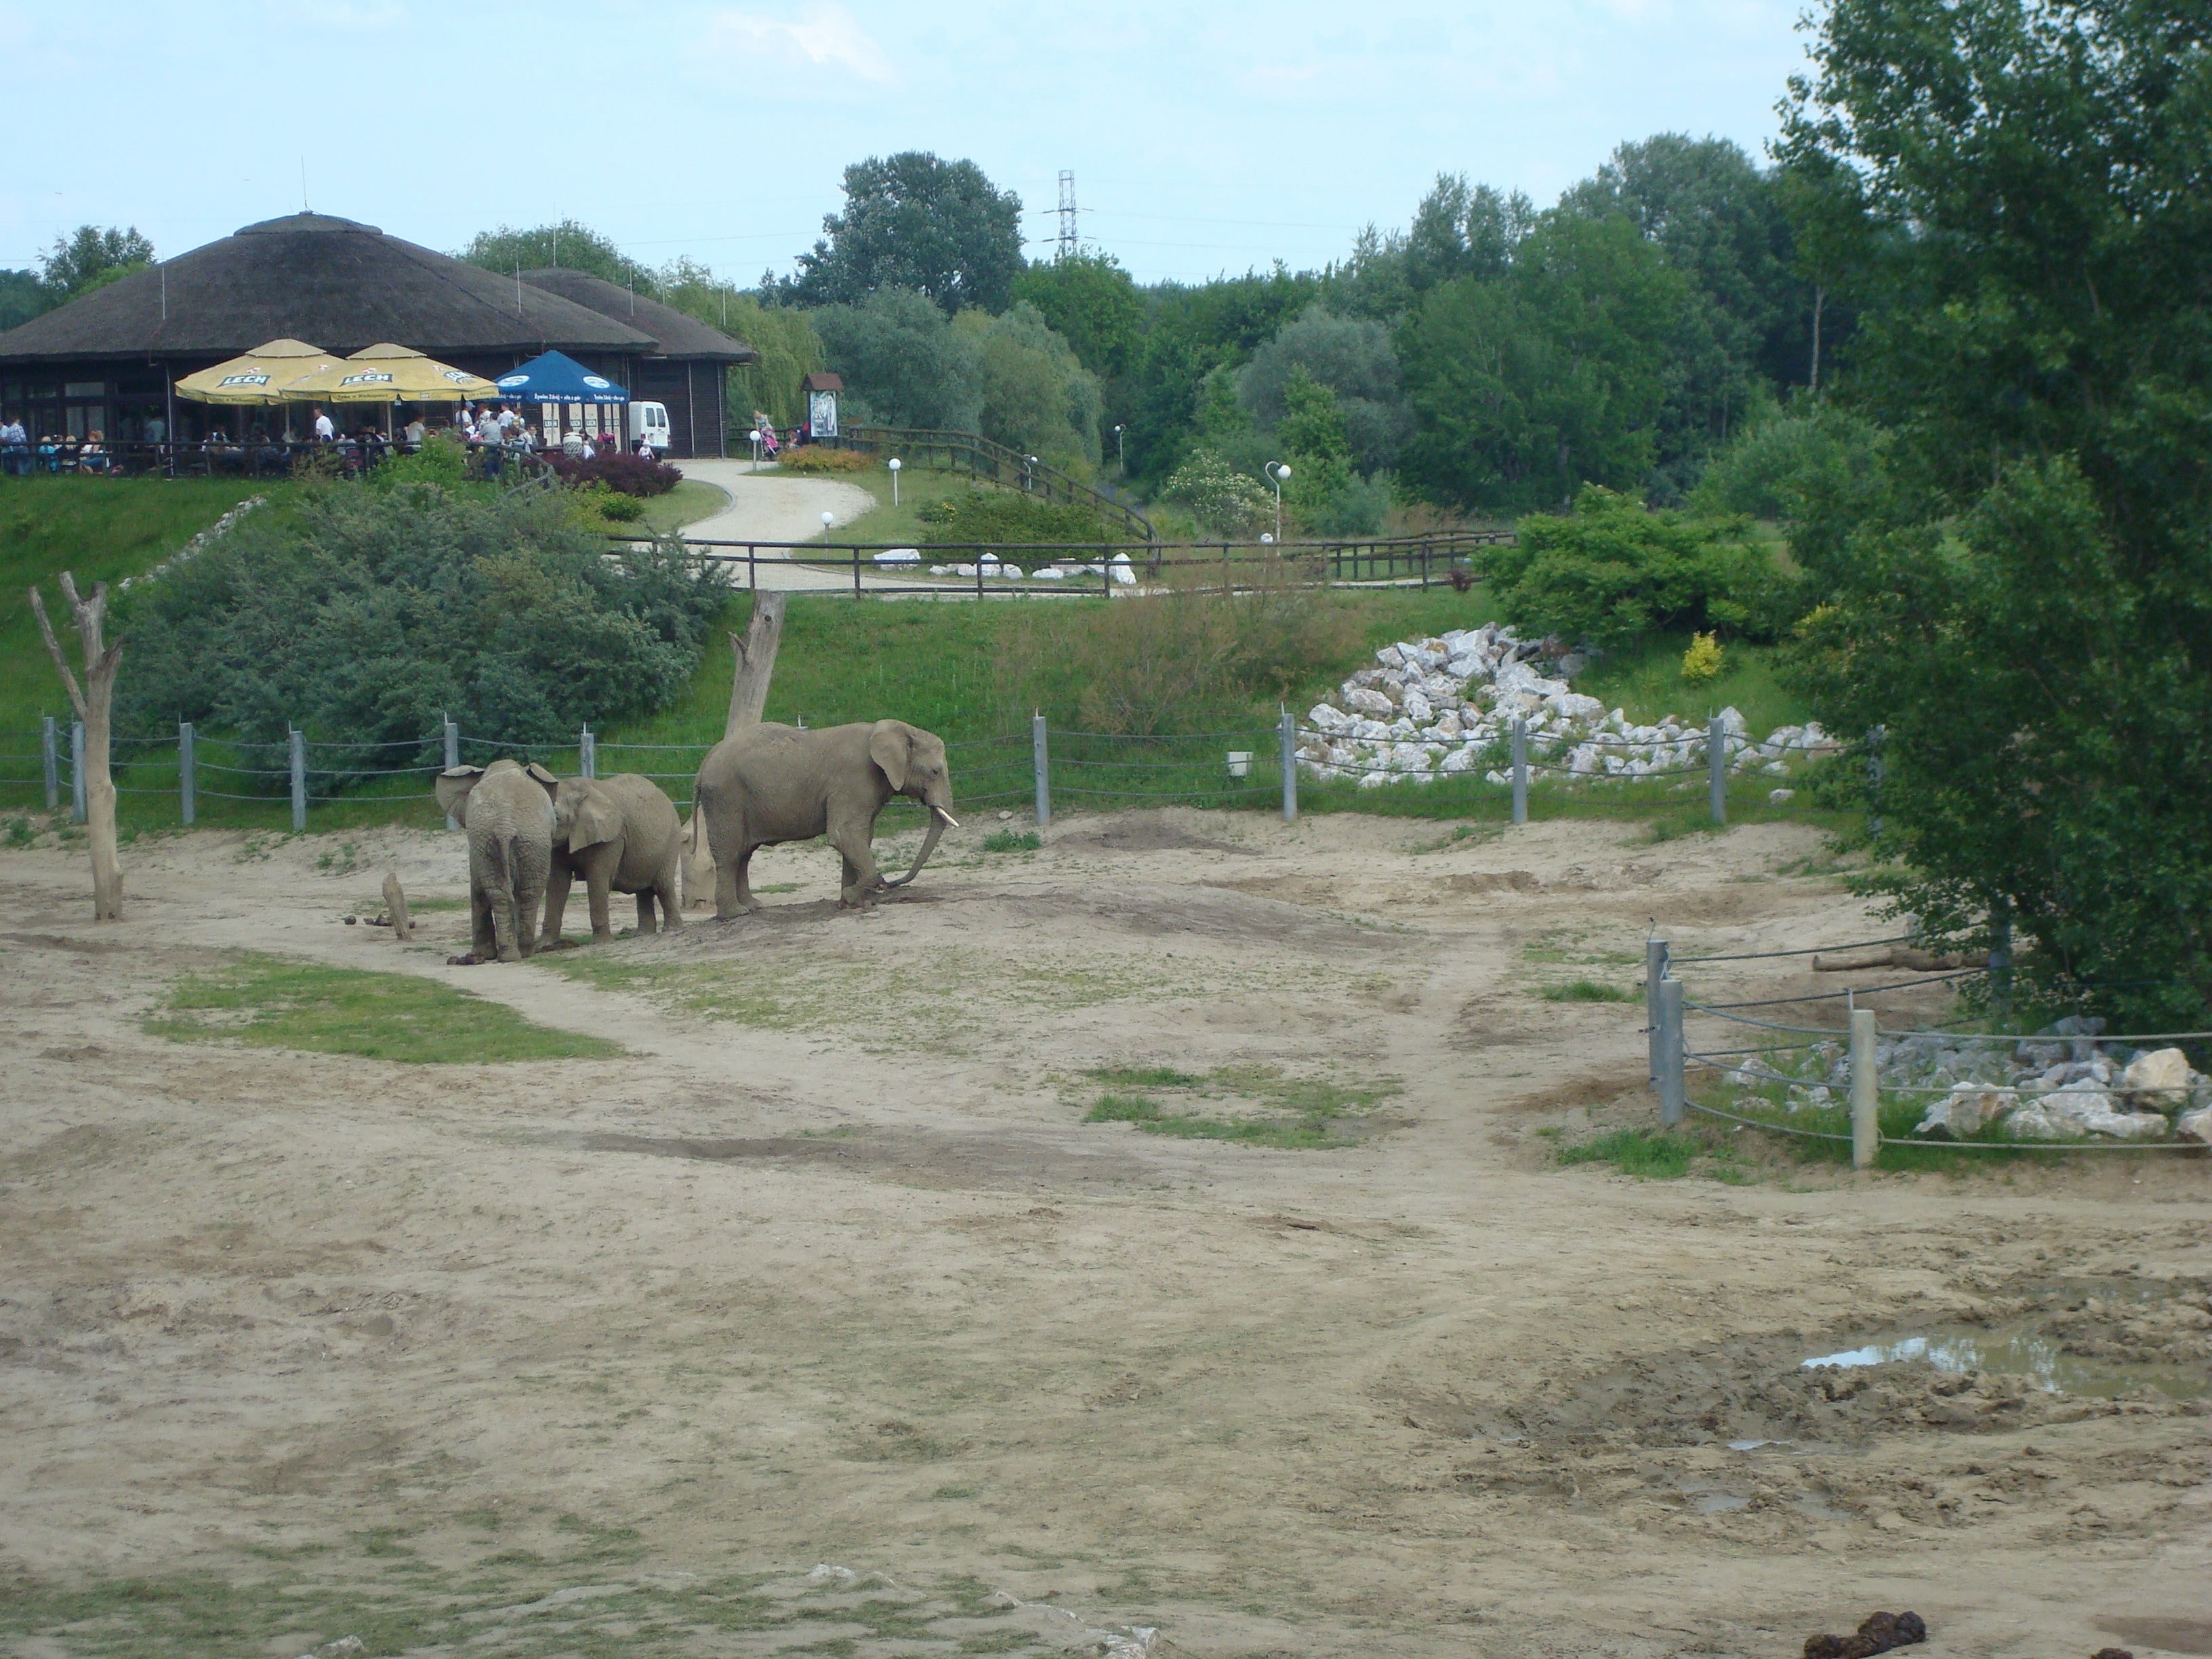 3 gray elephant